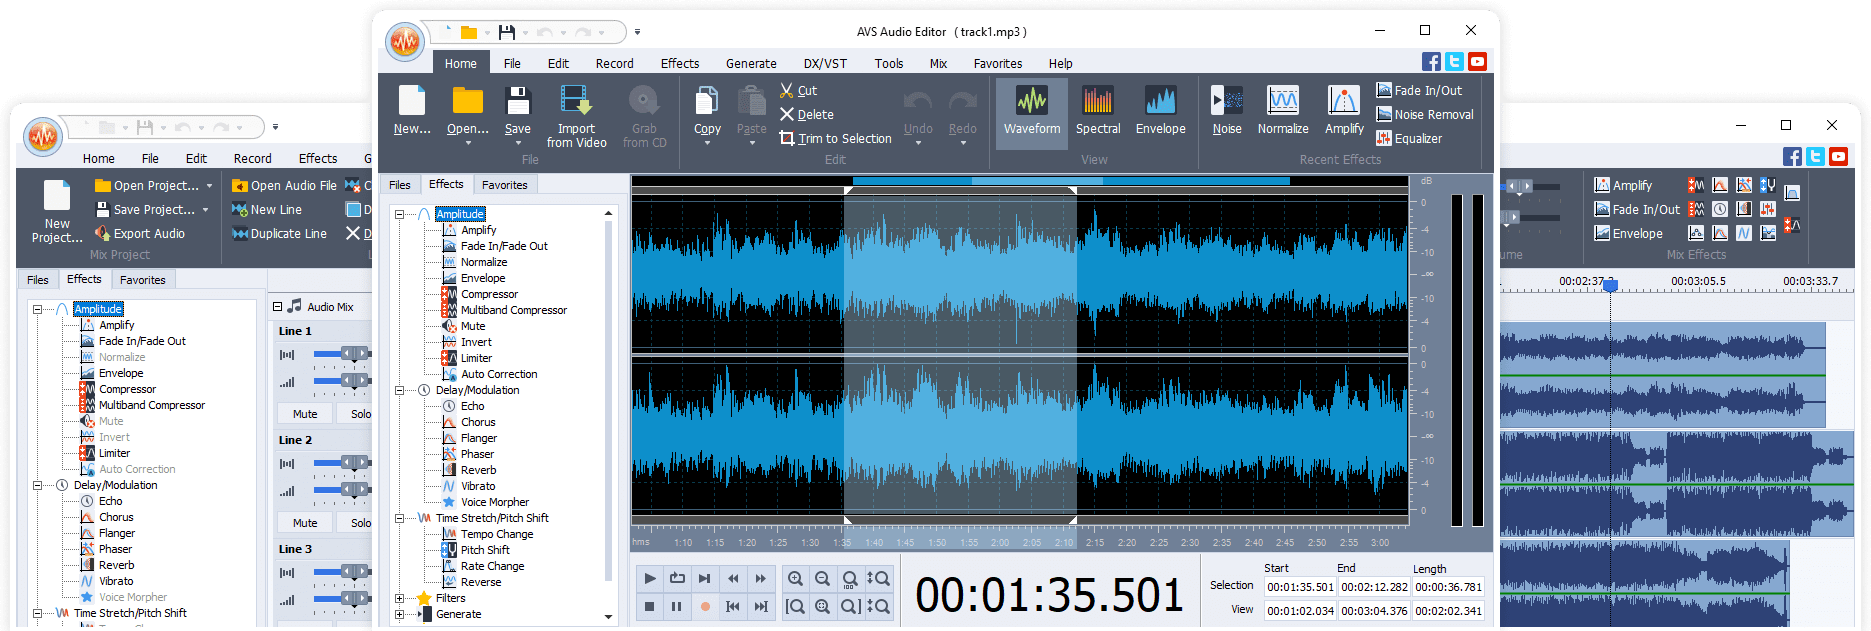 AVS Audio Editor 10.4.2.571 Portable Hrjc